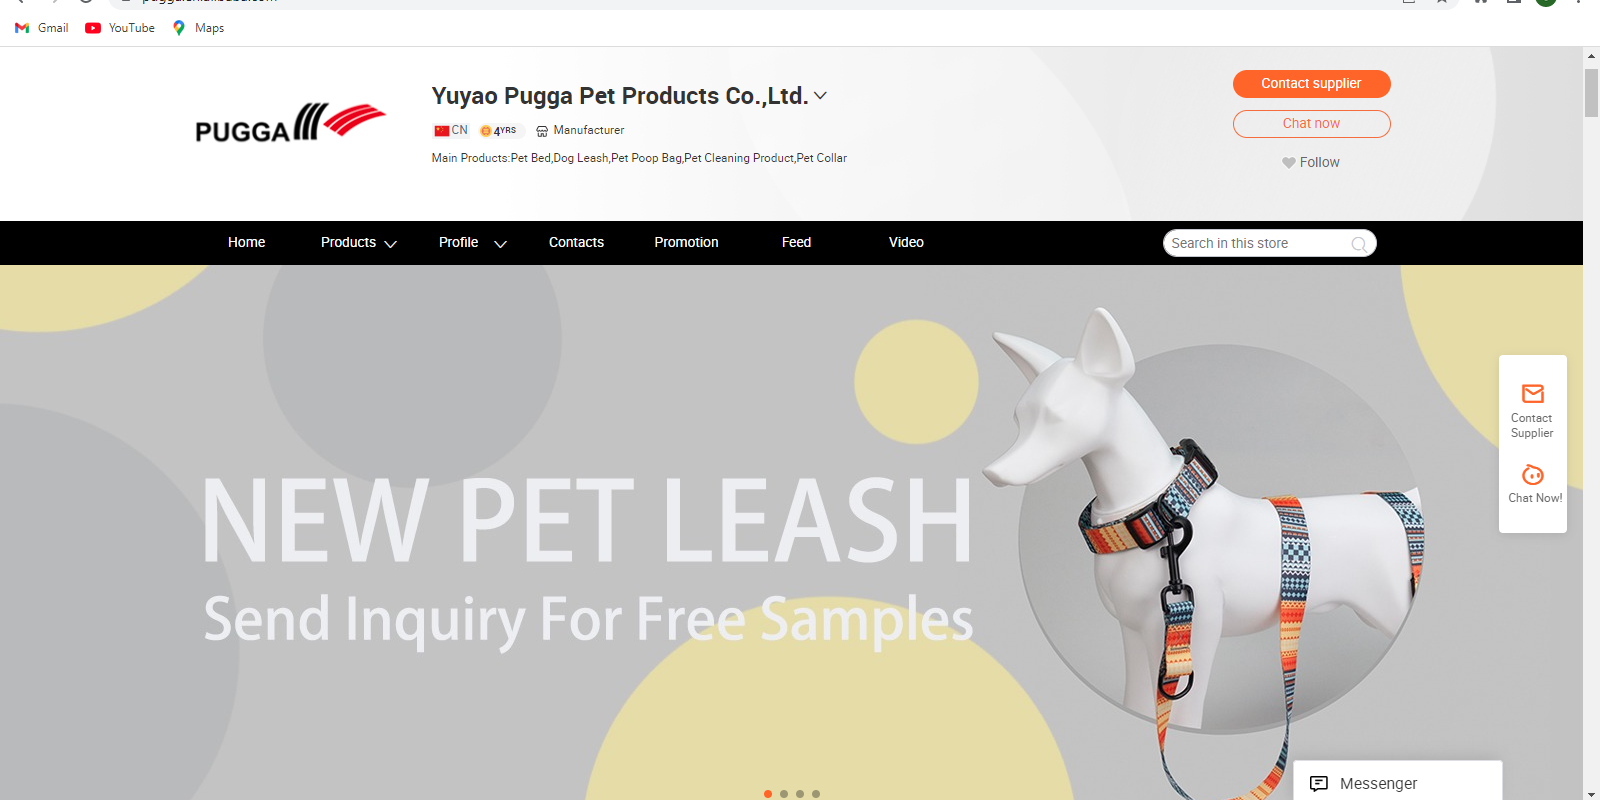 Yuyao Pugga Pet Products website